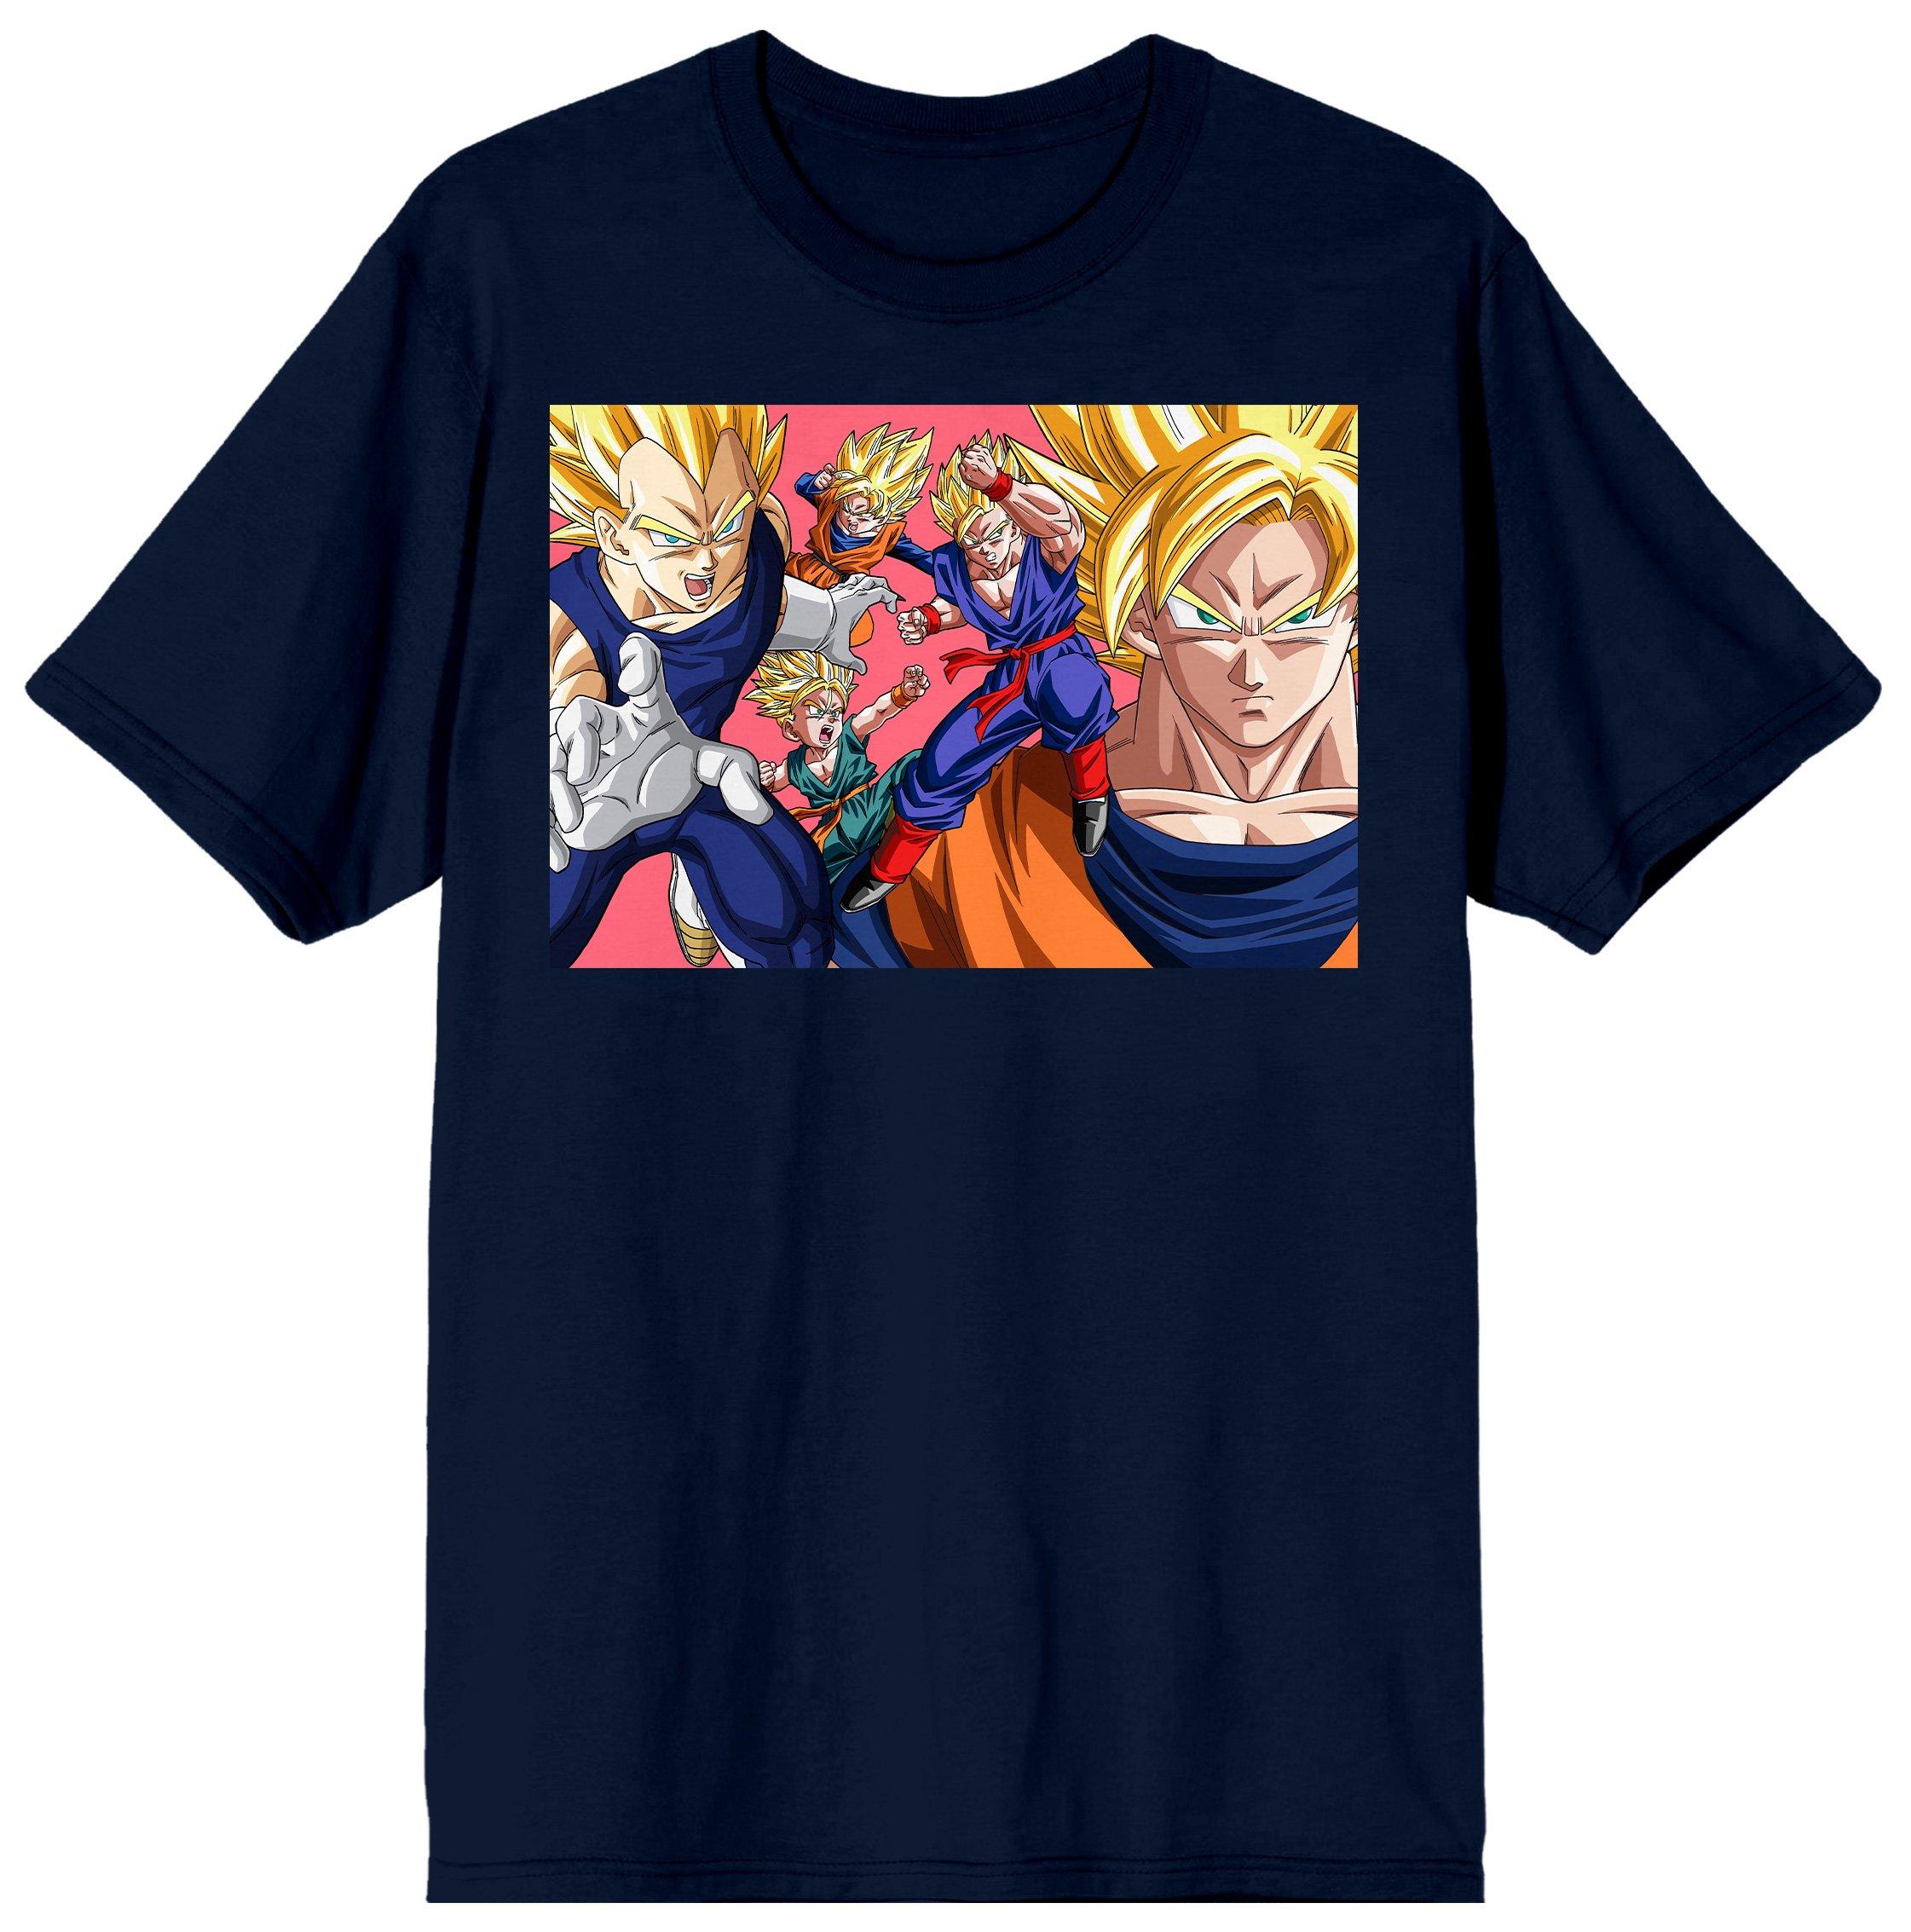 Dragon Ball Z Character Group Men's Anime Navy Blue Short Sleeve Graphic T-Shirt